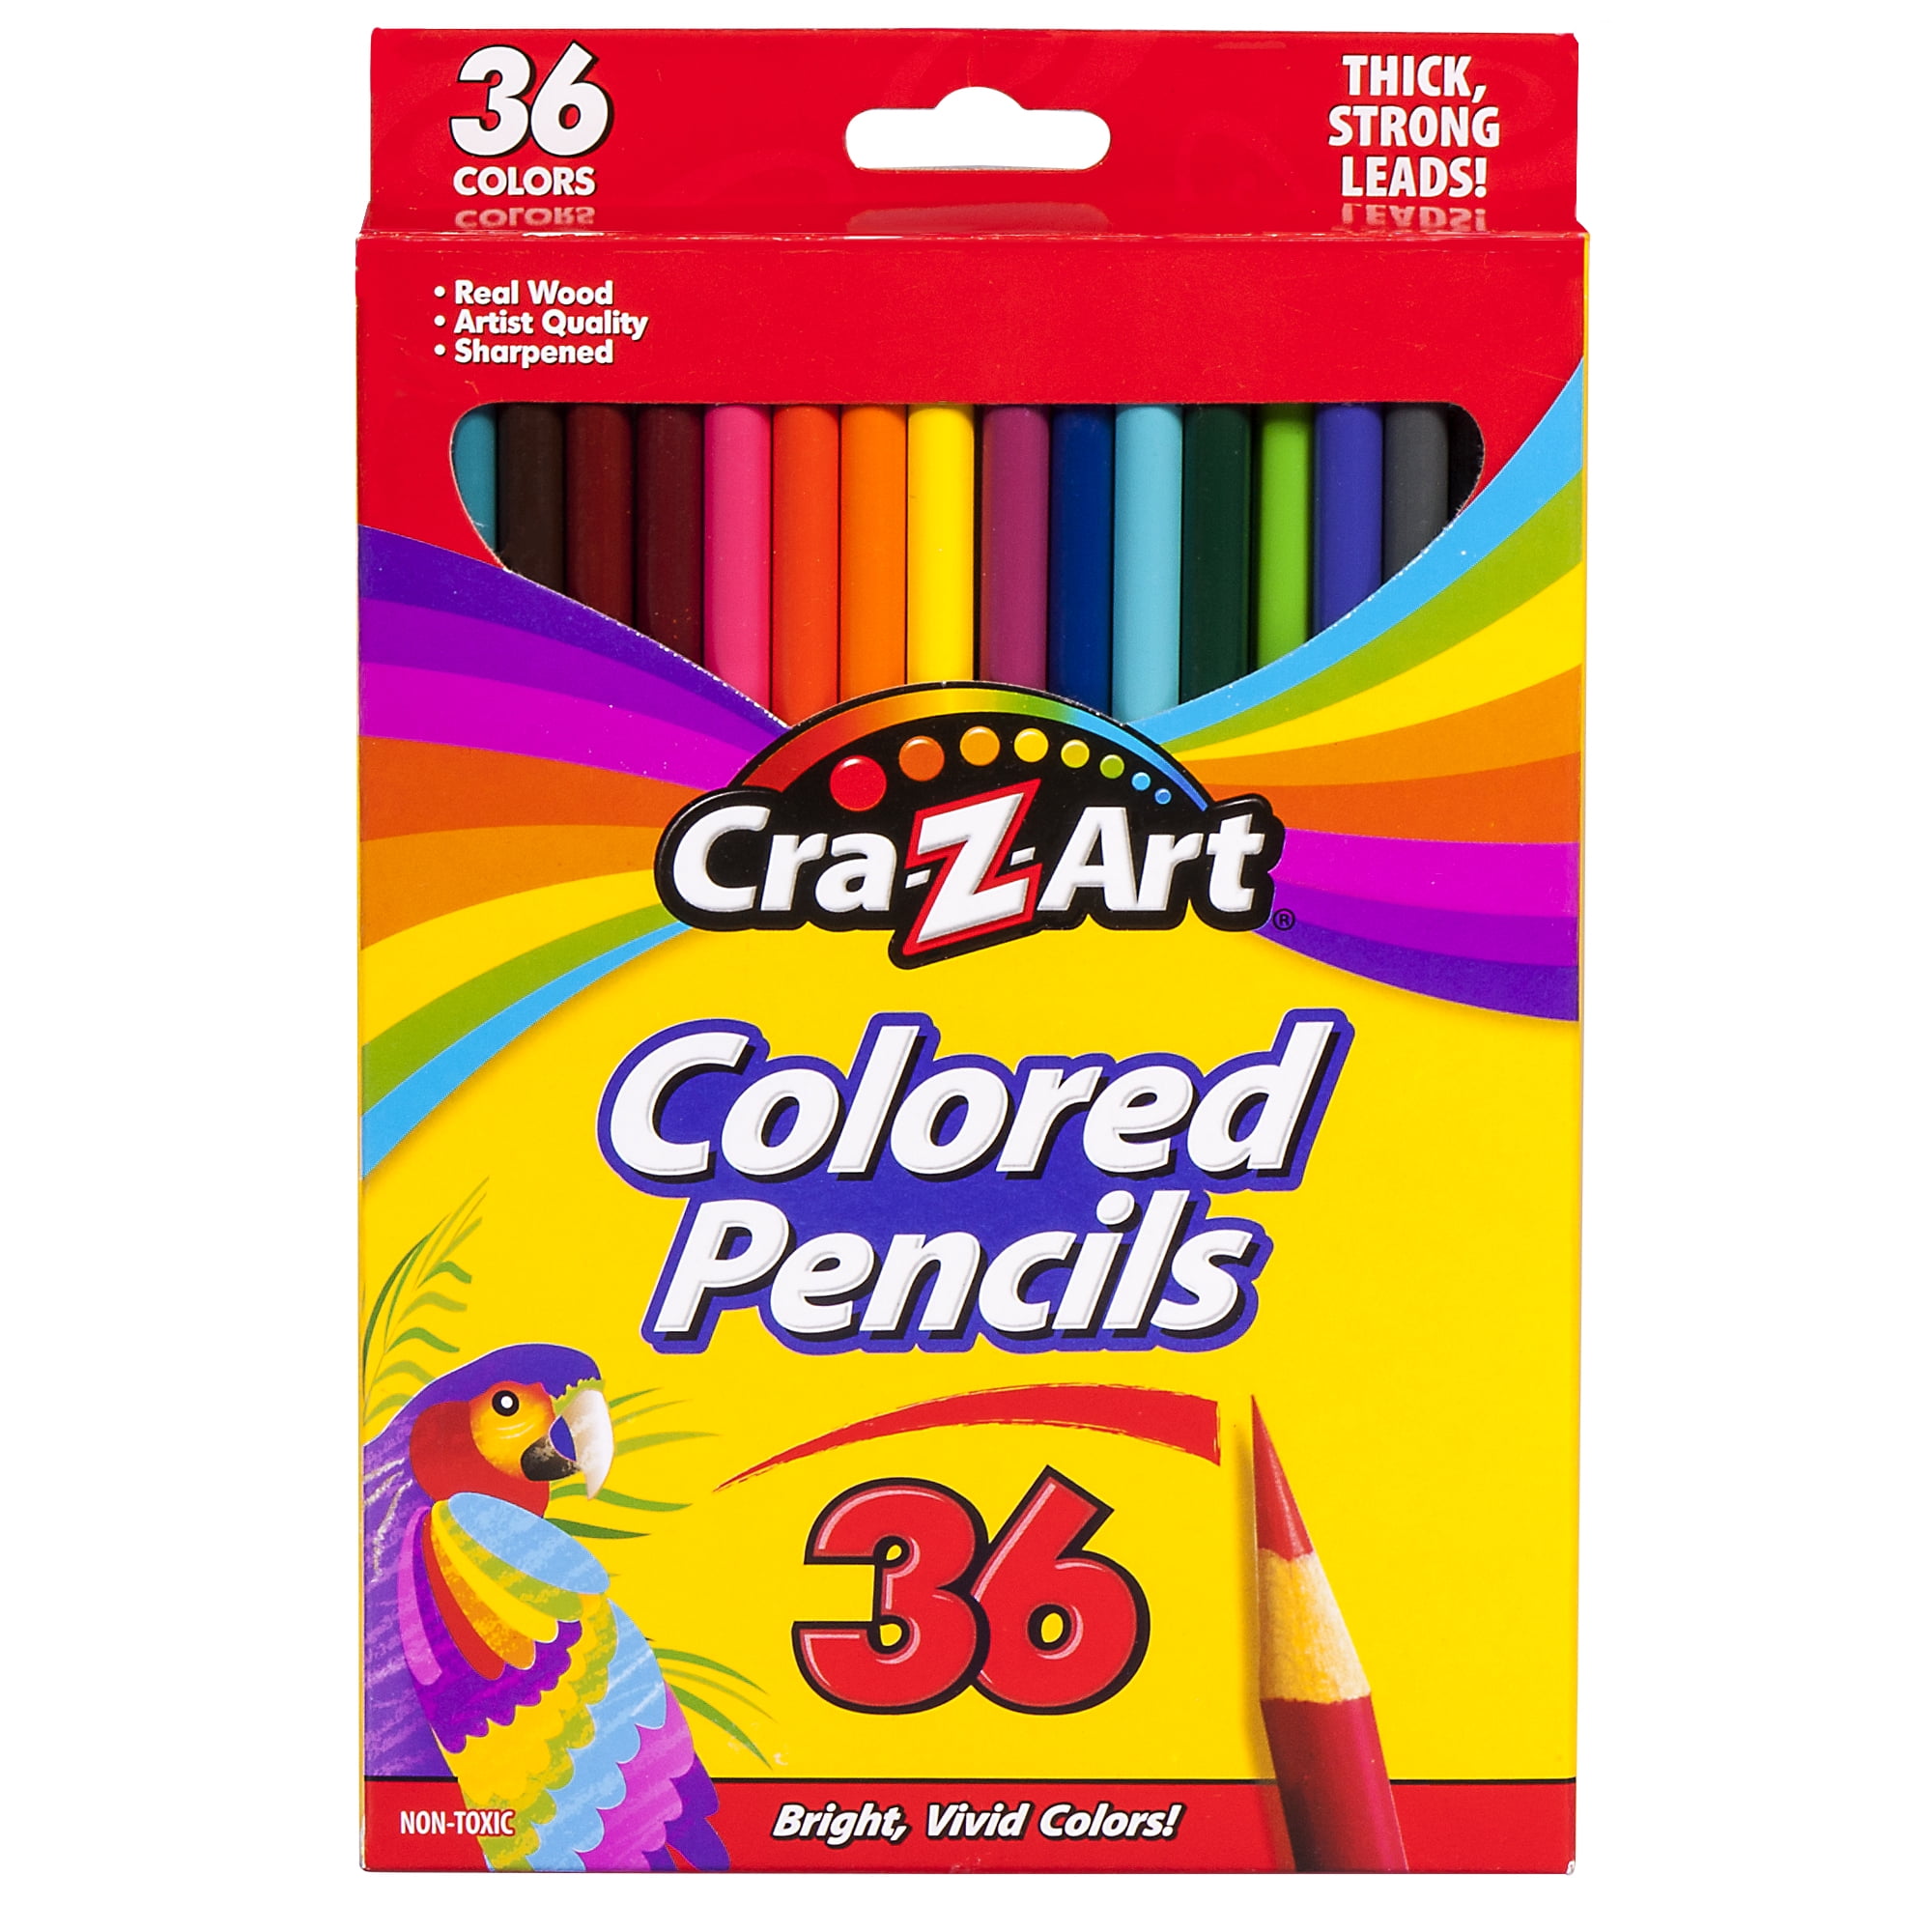 10403 Cra-Z-art Colored Pencils 24 Count